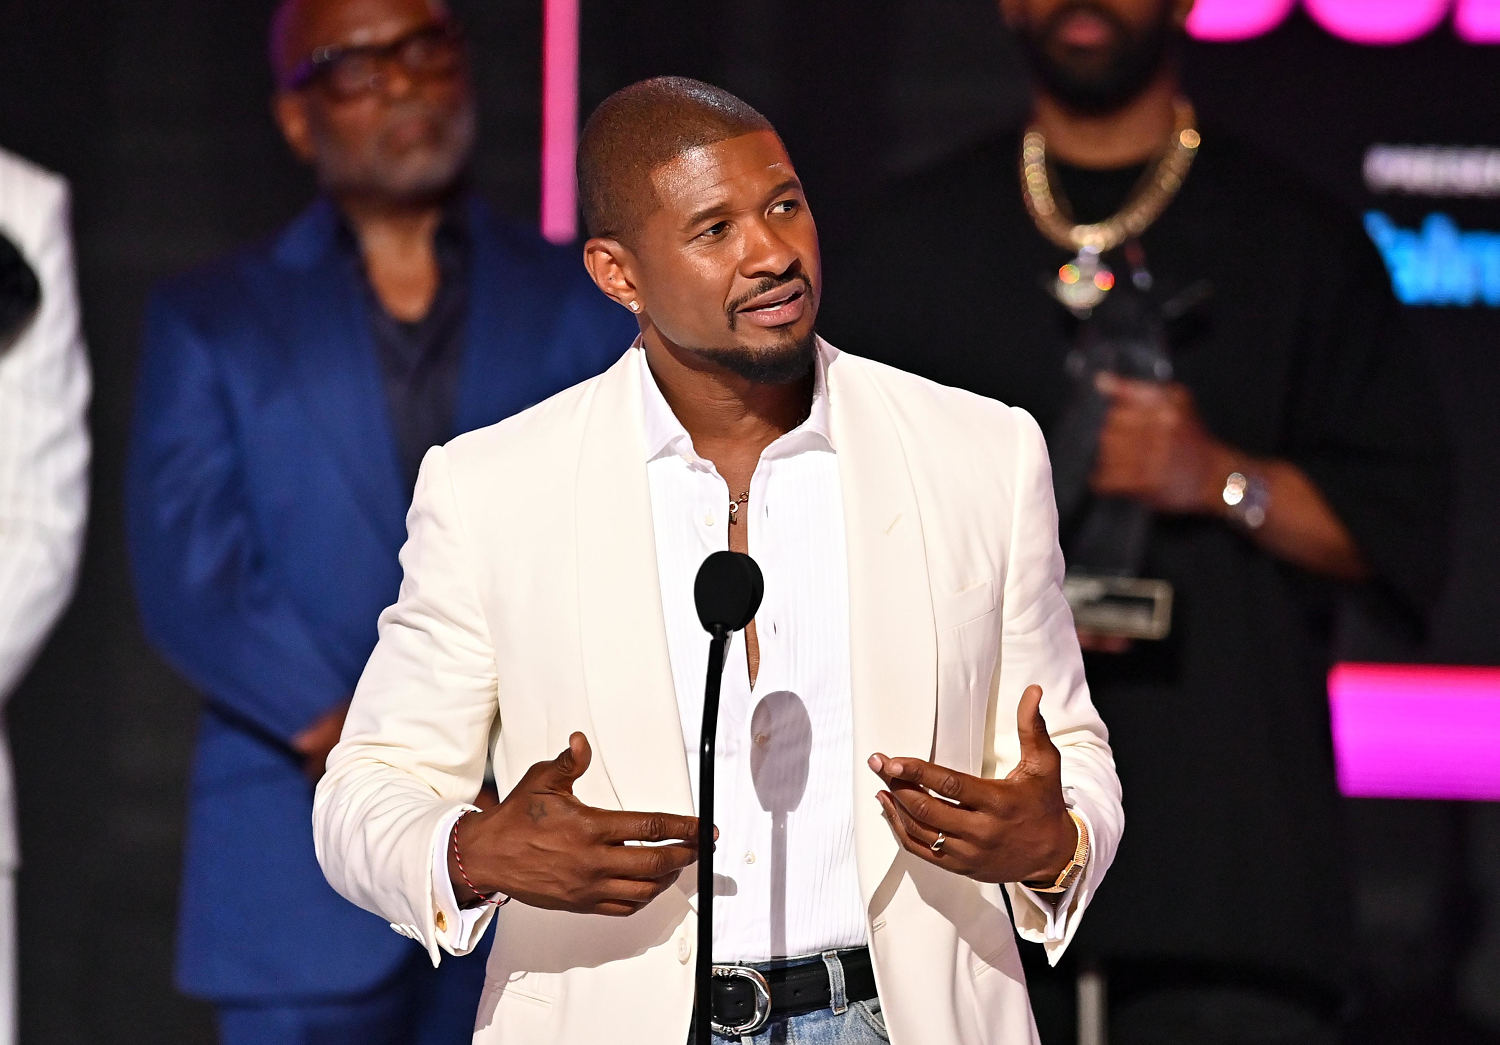 BET posts 'unfiltered' Usher speech after censorship during live awards ceremony